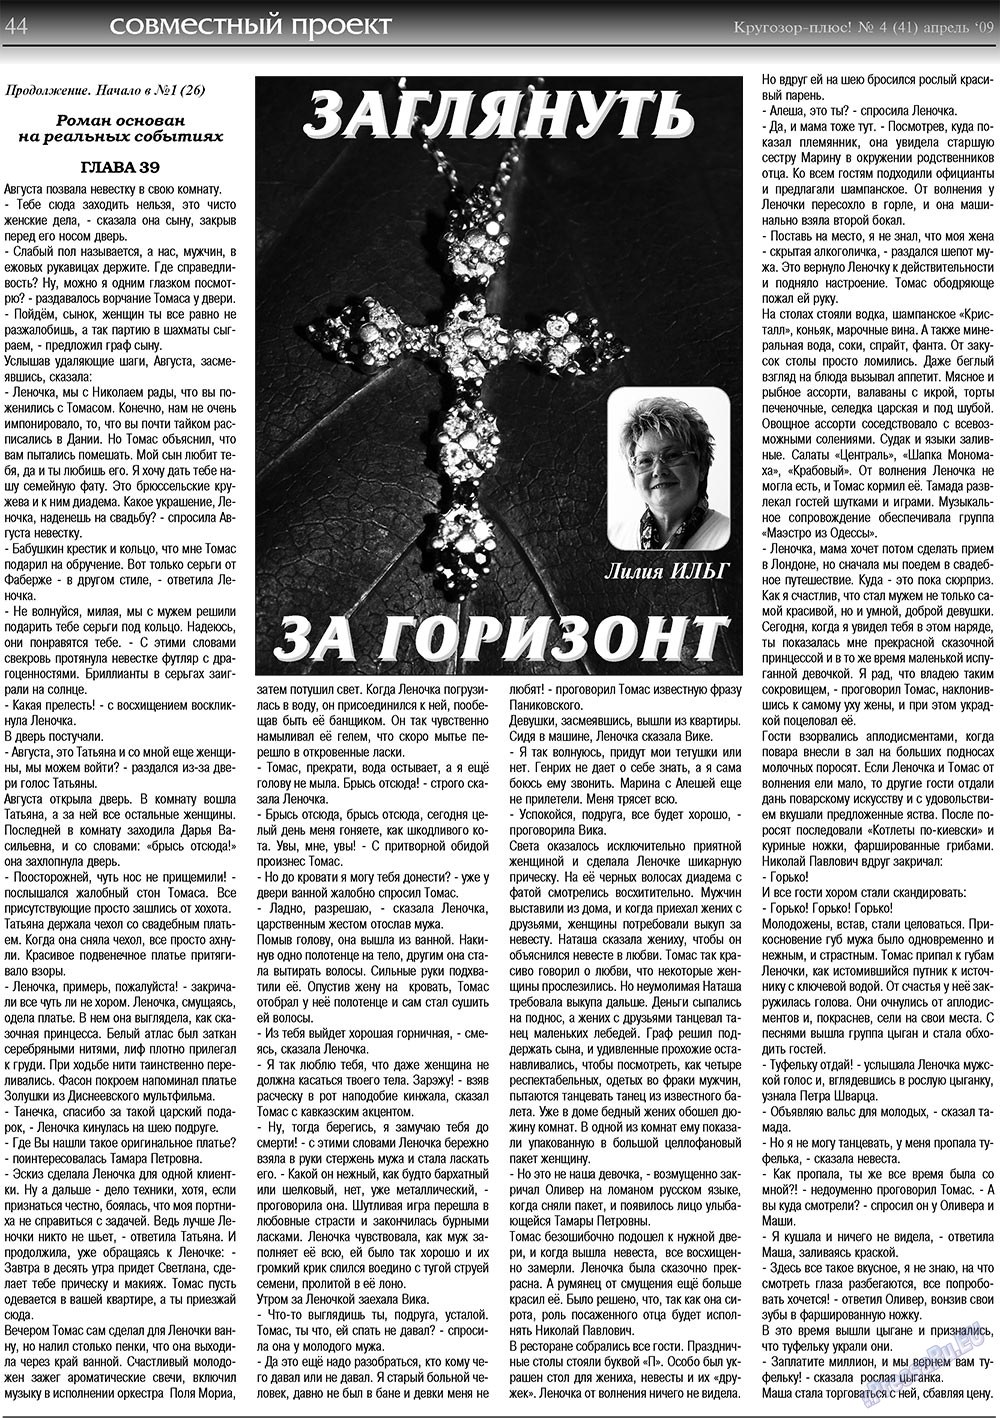 Кругозор плюс! (газета). 2009 год, номер 4, стр. 44